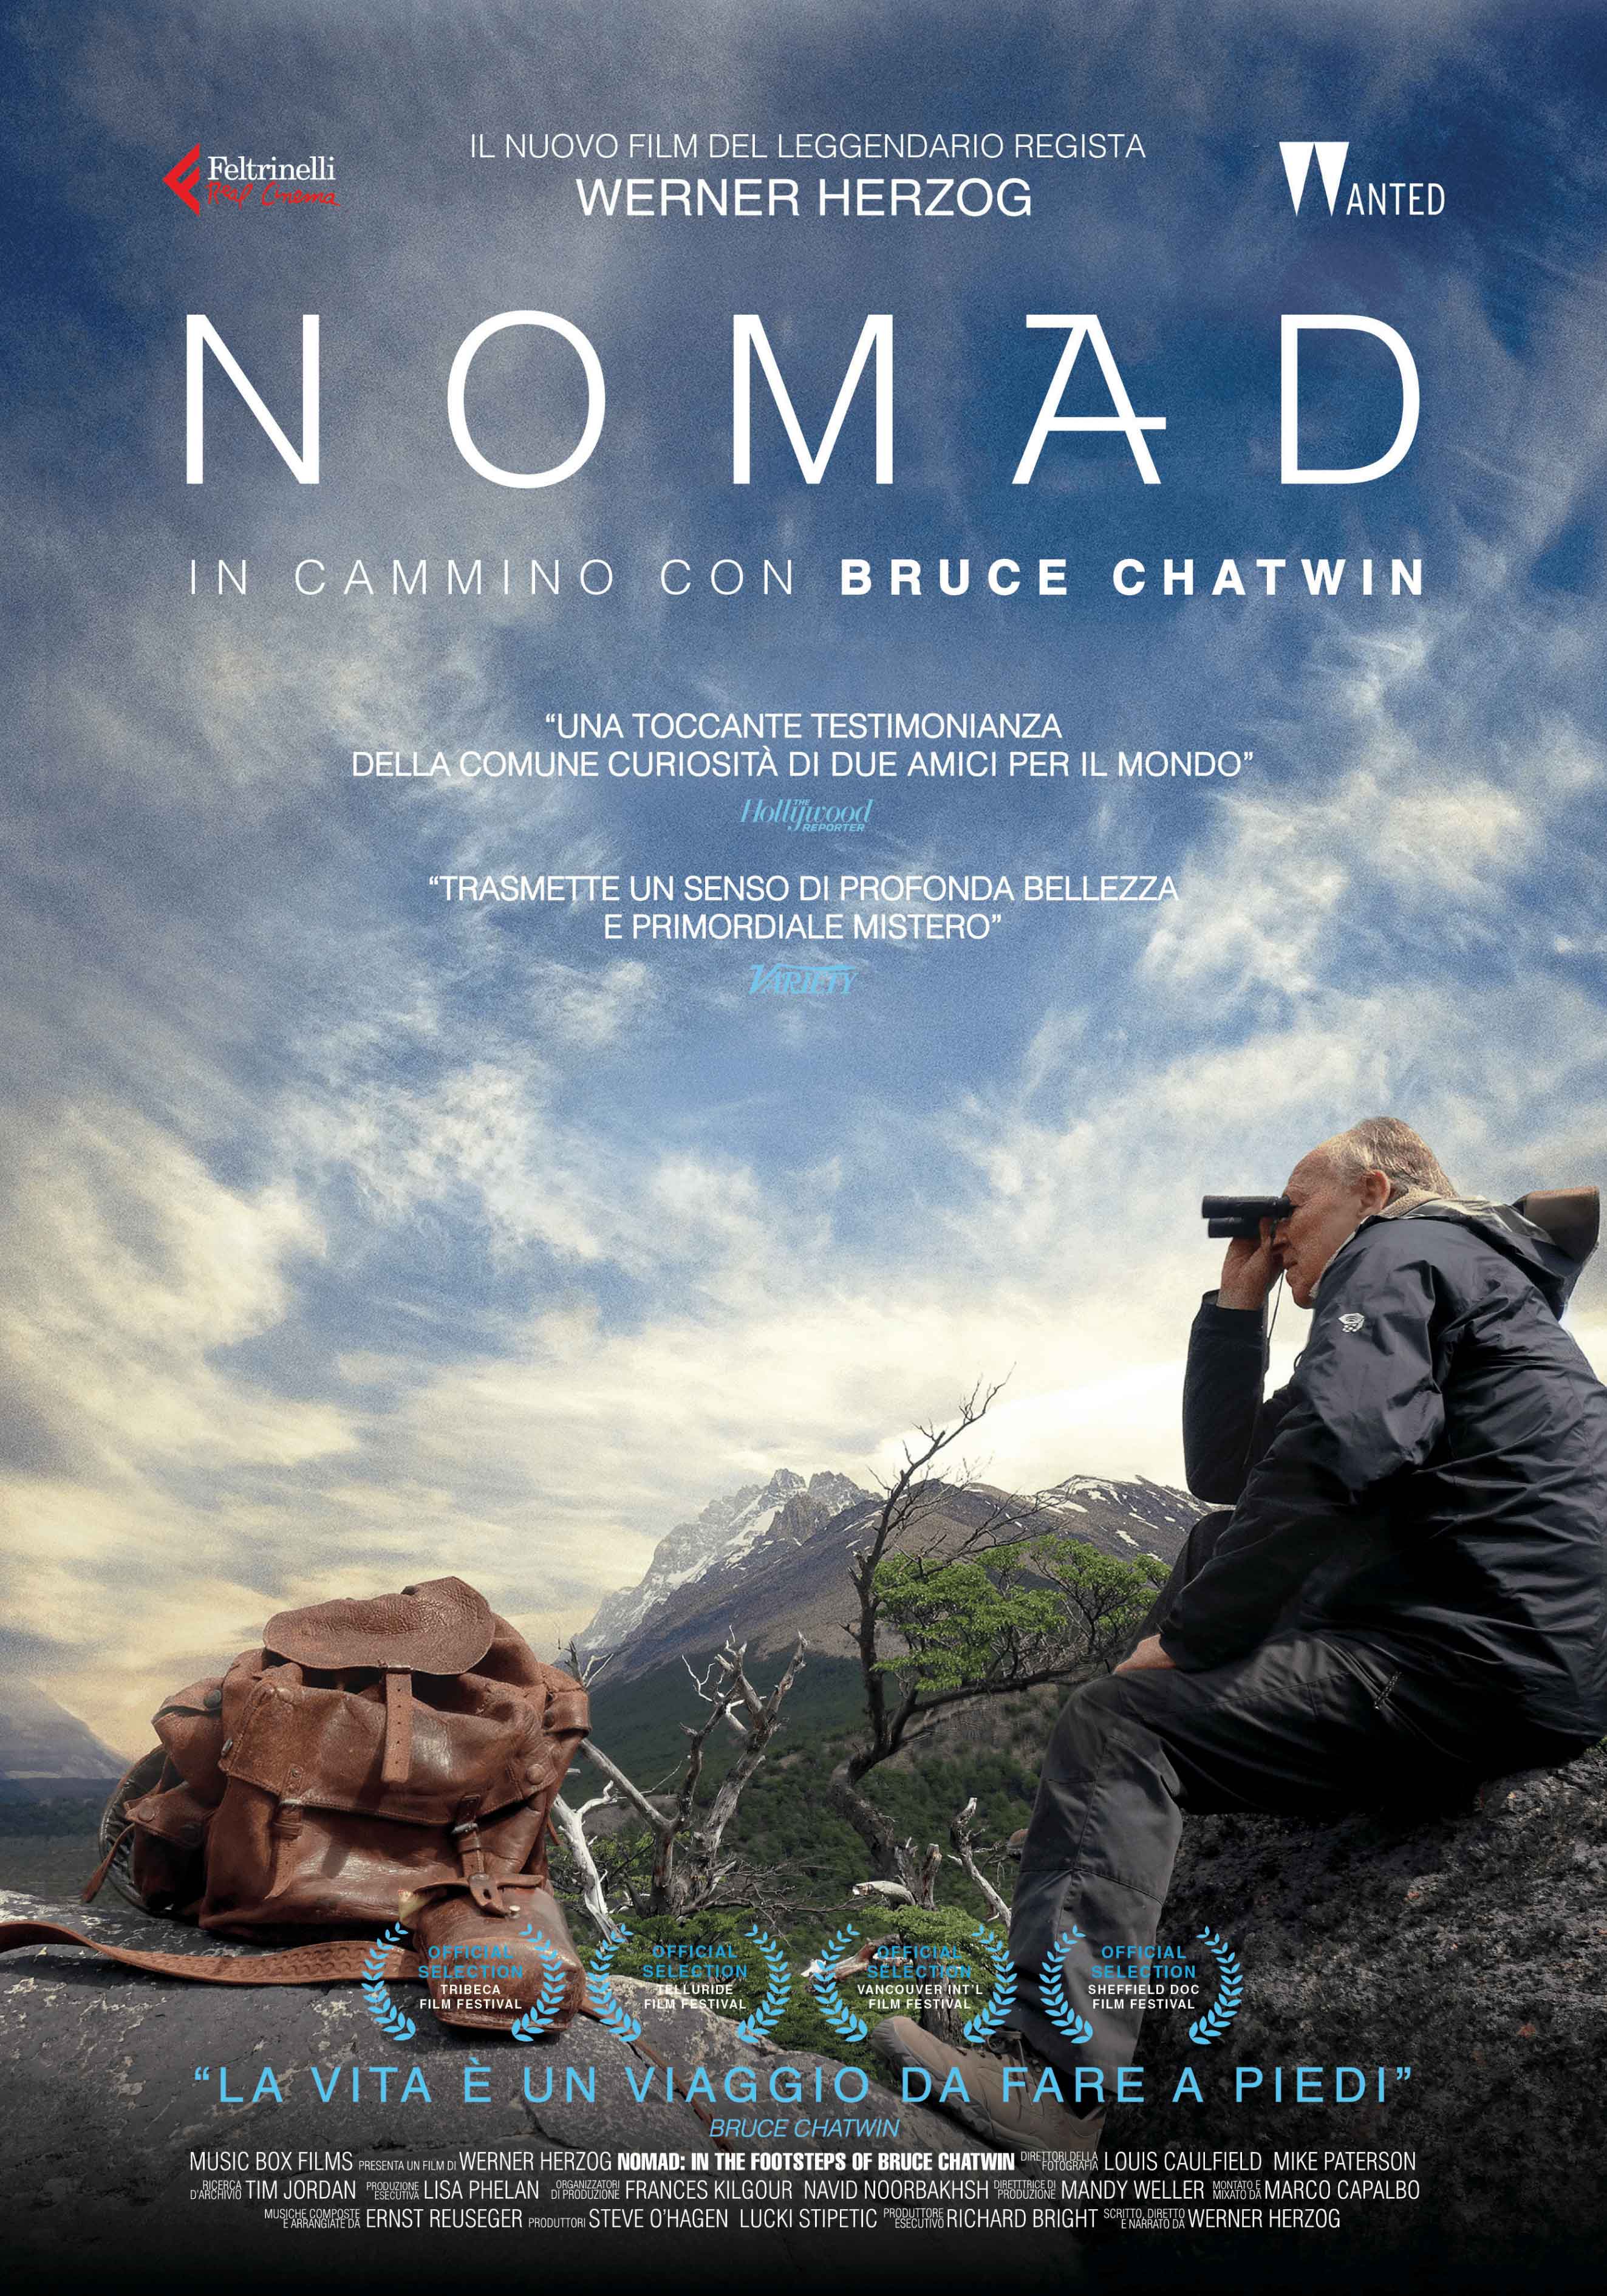 Nomad: in cammino con Bruce Chatwin